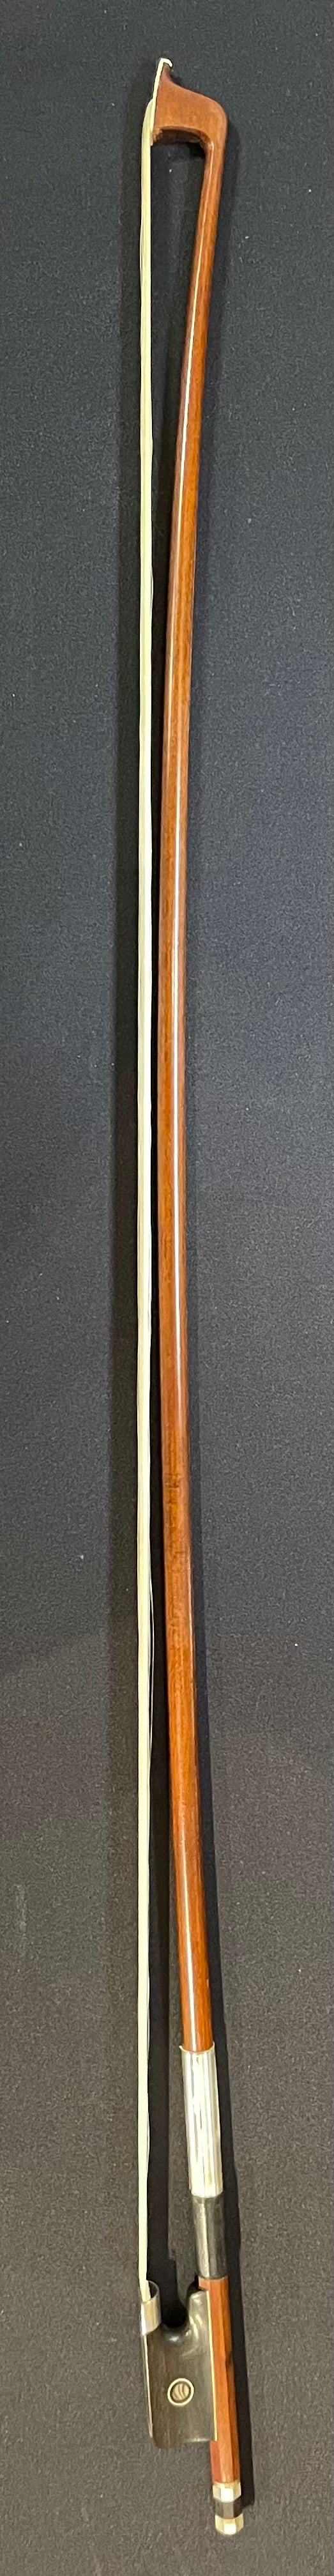 Full Size Viola Bow - S. Eastman Wood Model